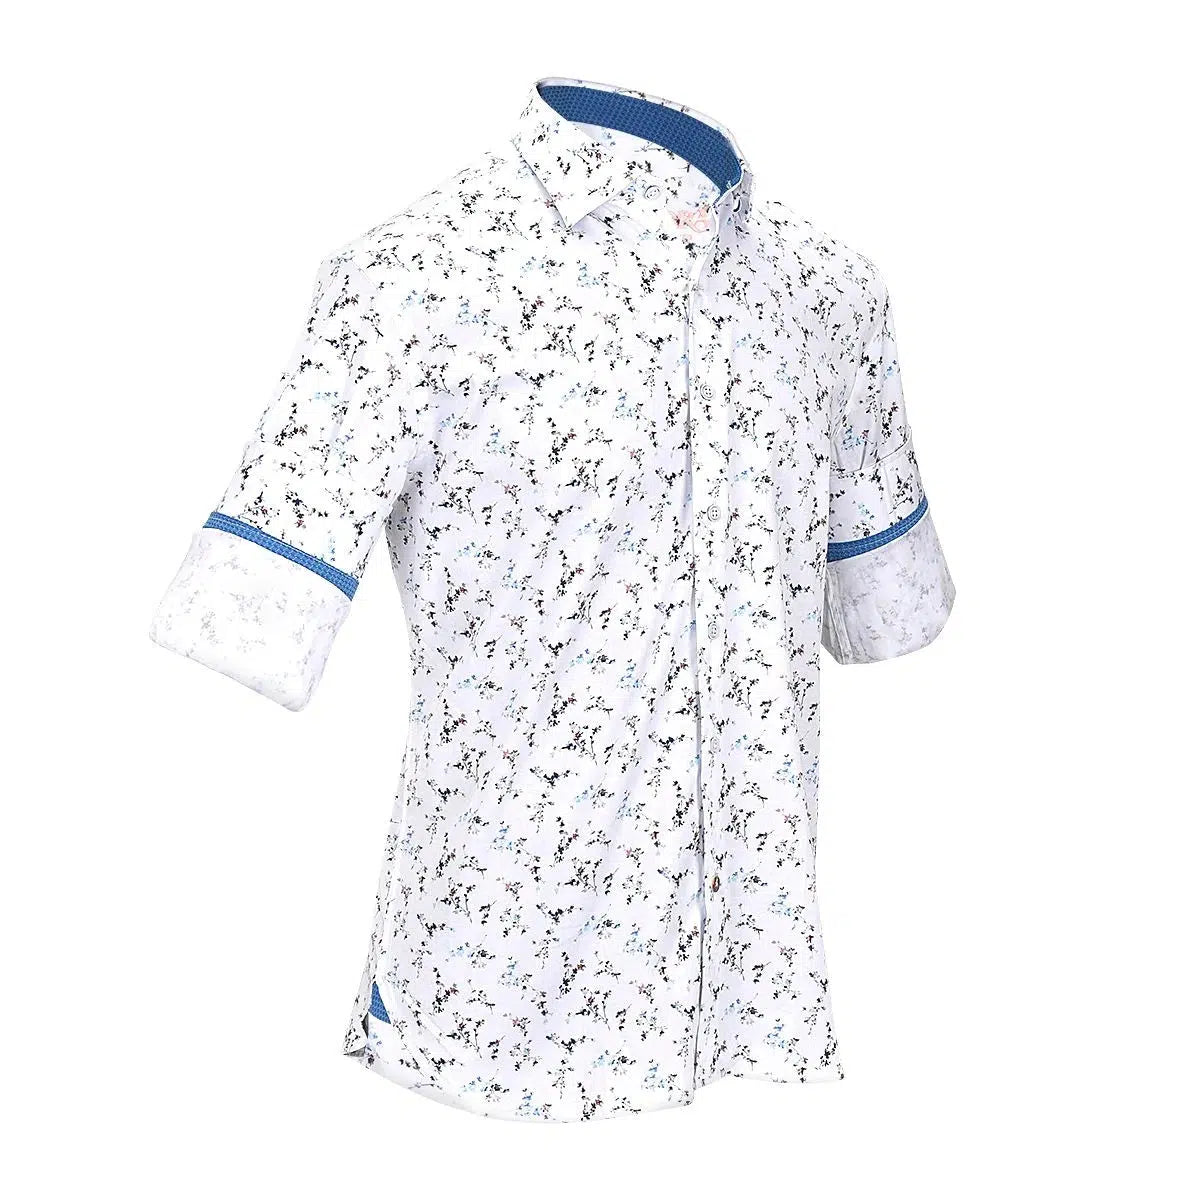 CM04609 - Cuadra white casual fashion short sleeve cotton shirt.-Kuet.us